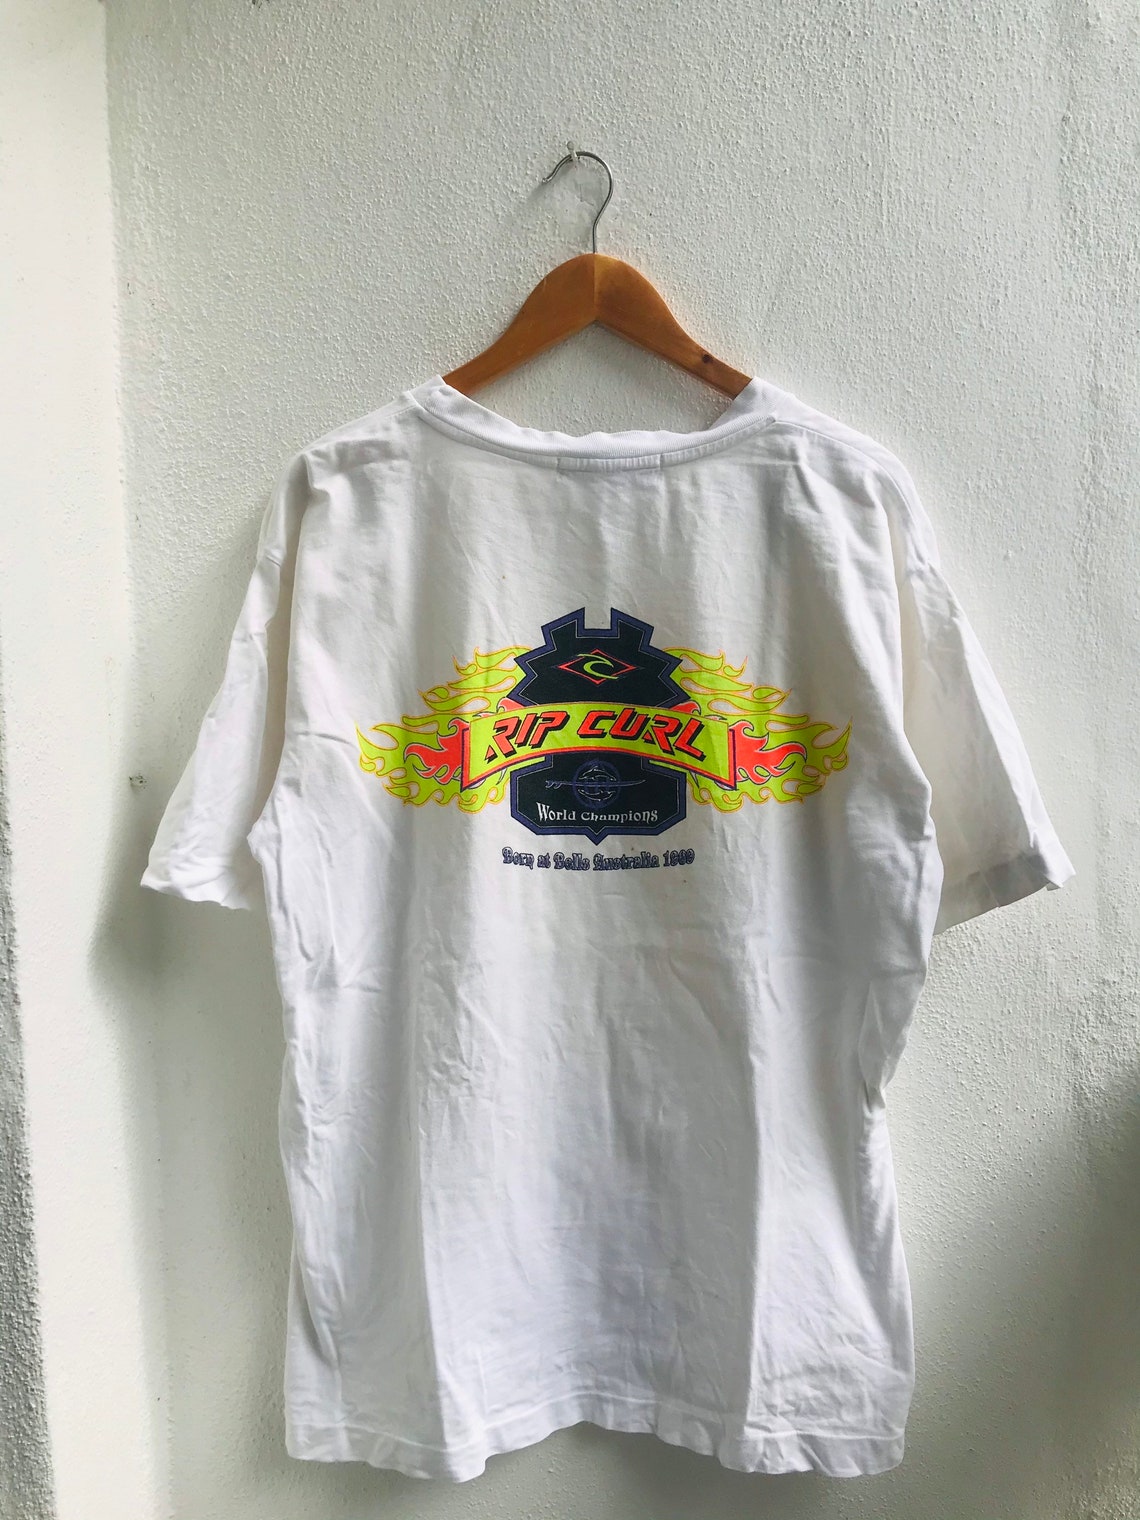 Vintage Rip Curl Original 90s Surfing Clothing Brand T-Shirt | Etsy